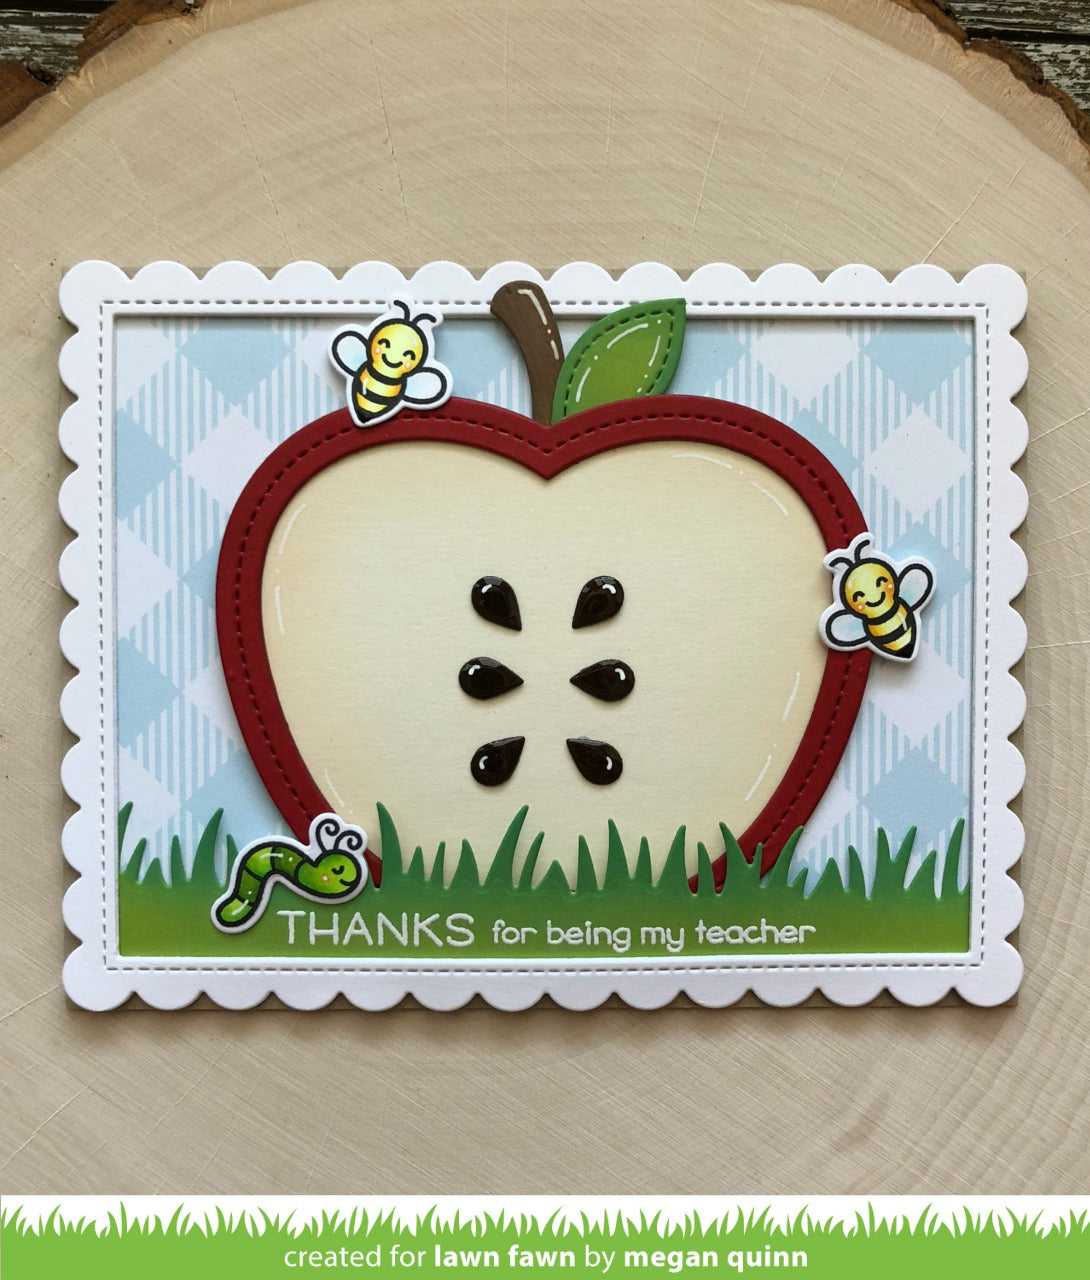 stitched apple frames